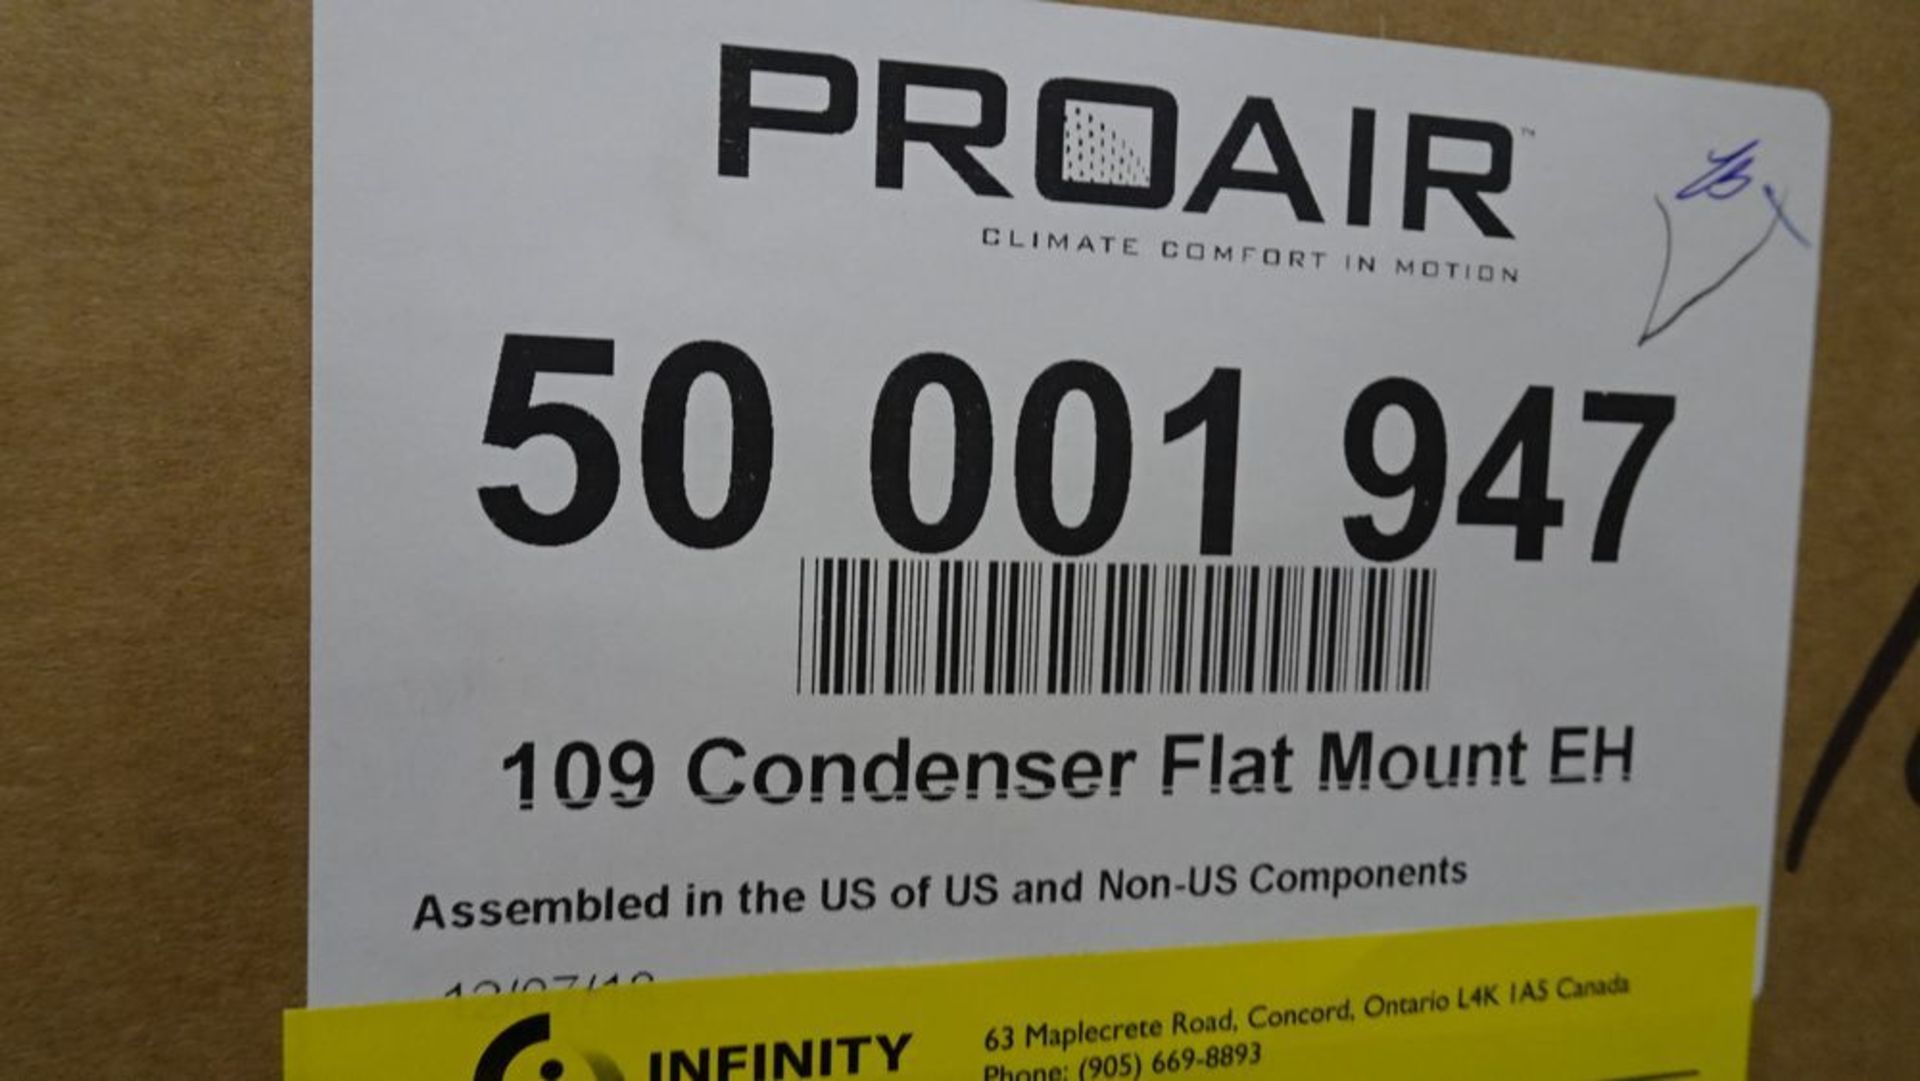 2018 PROAIR 109 CONDENSER FLAT MOUNT UNITS (REUTER) - Image 3 of 3